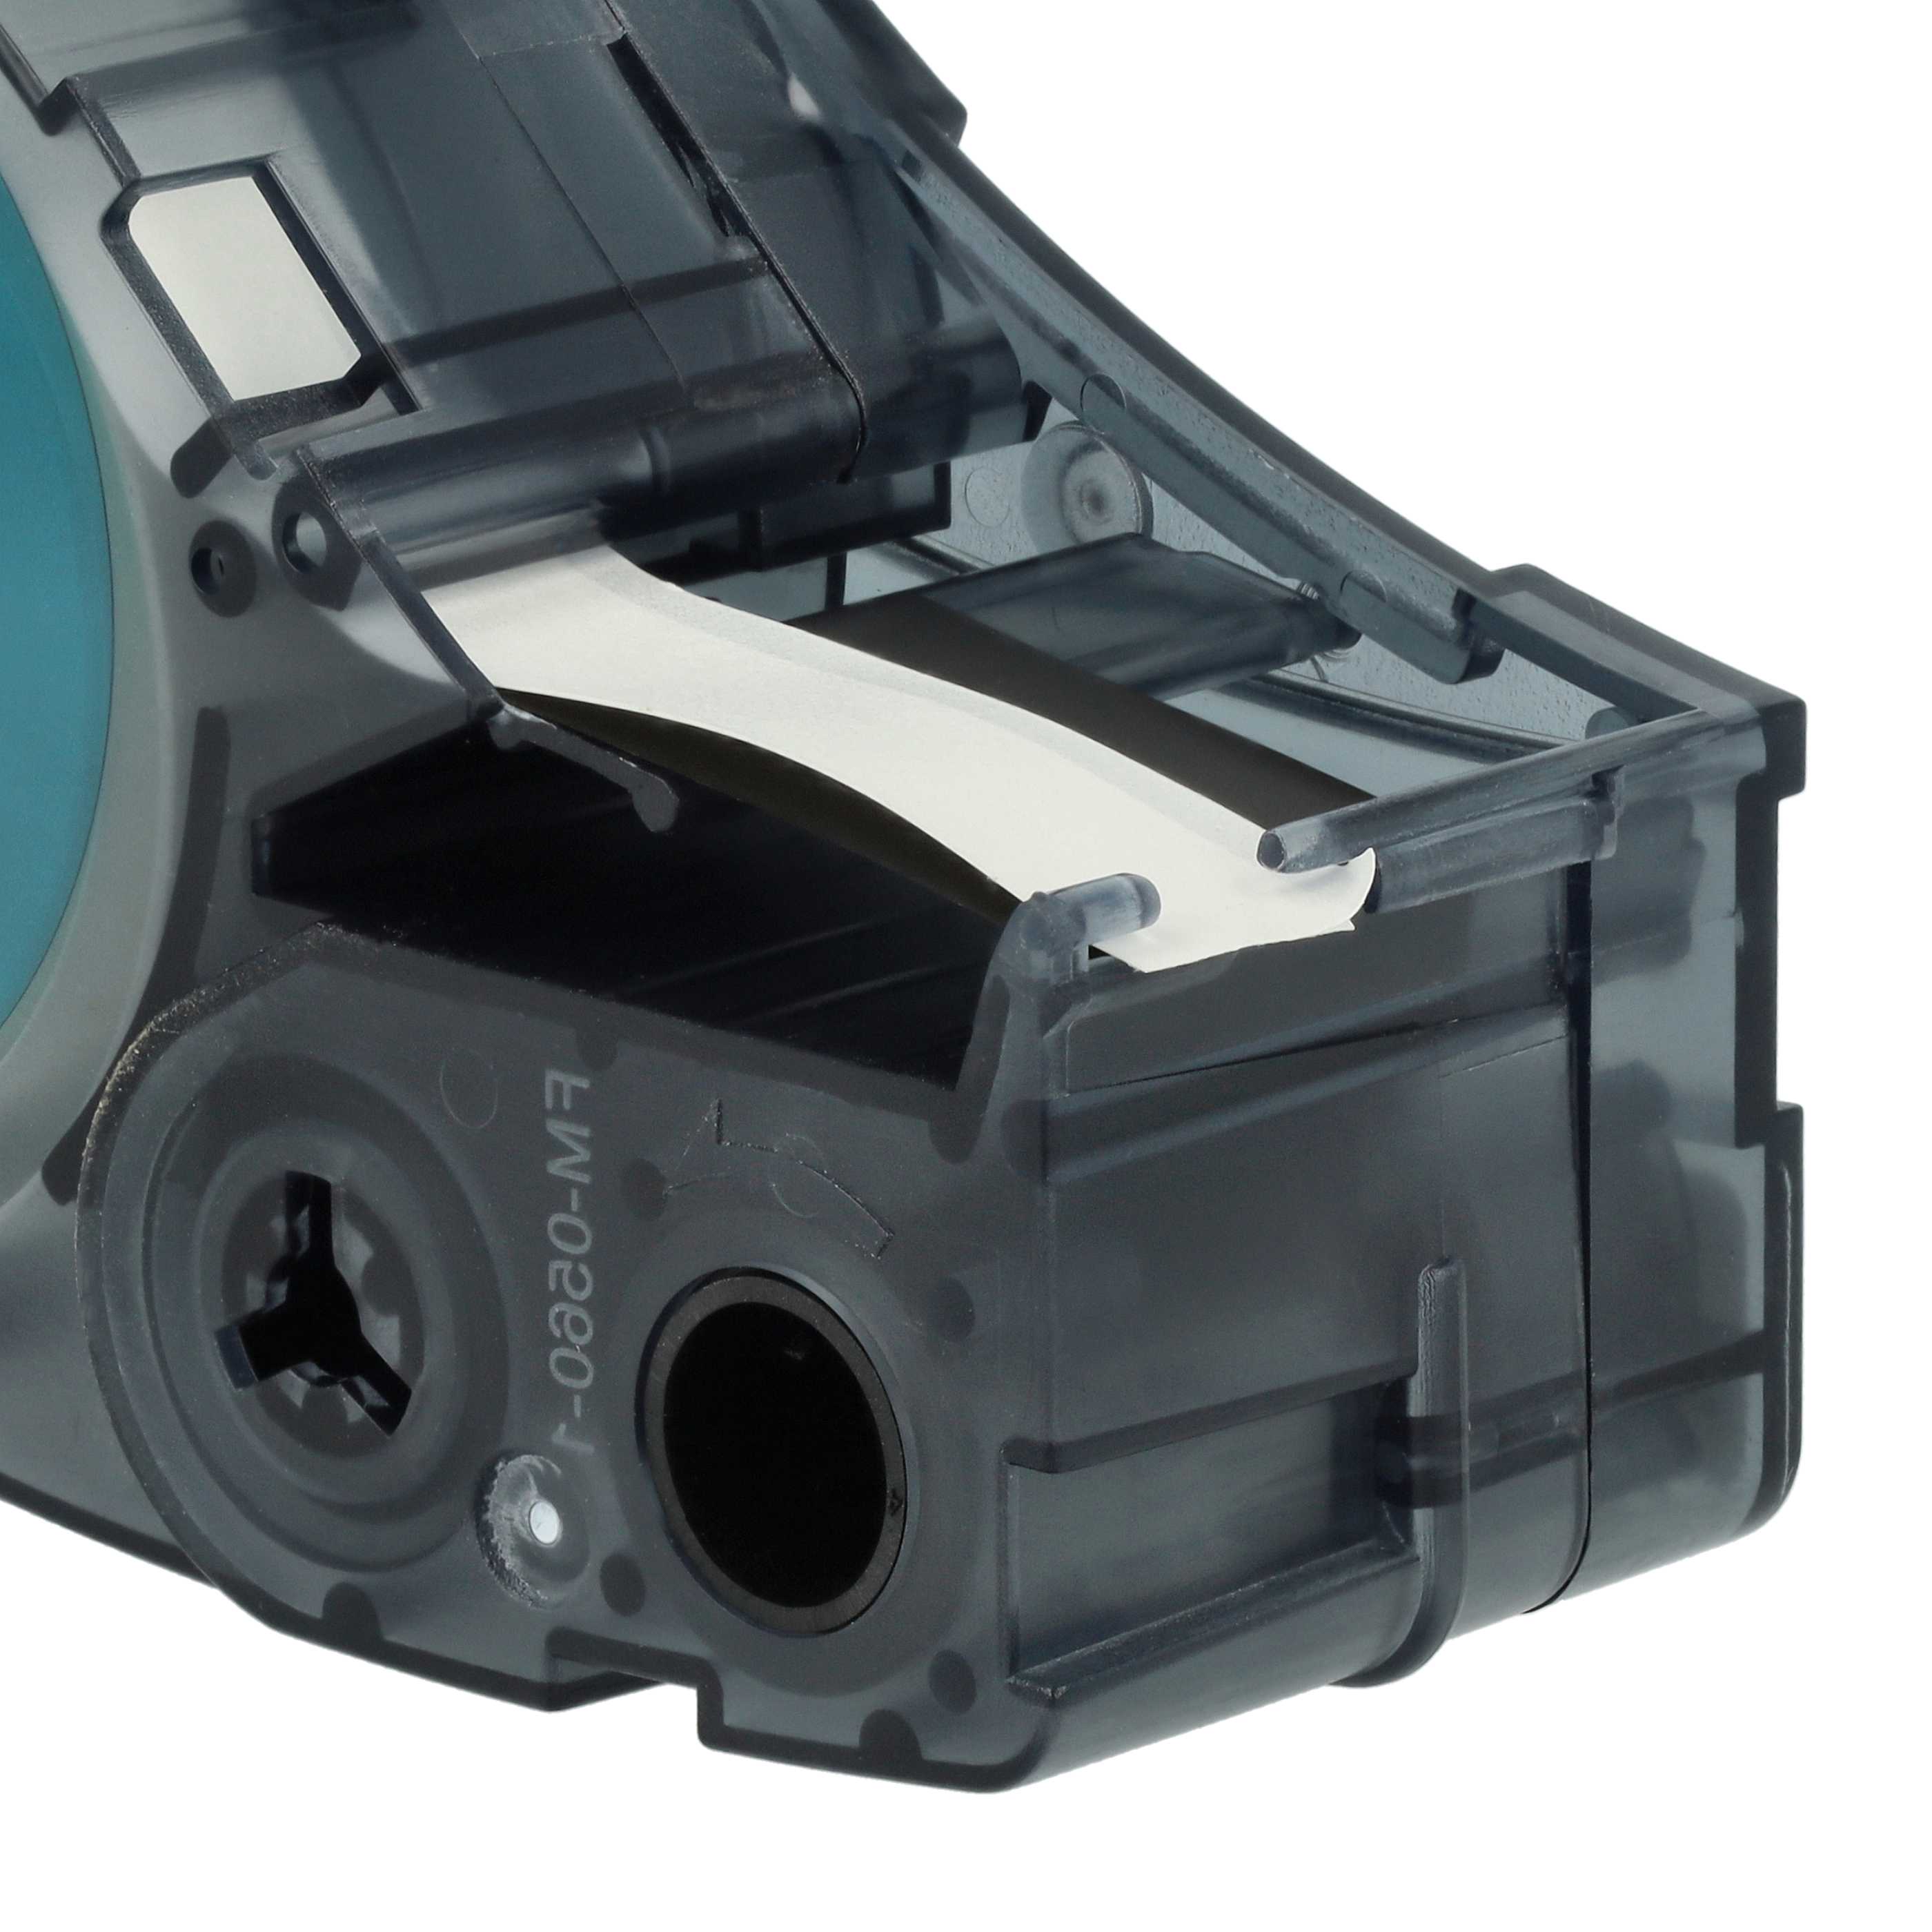 Cassetta nastro sostituisce Brady M21-375-7425 per etichettatrice Brady 9,5mm nero su bianco, polipropilene